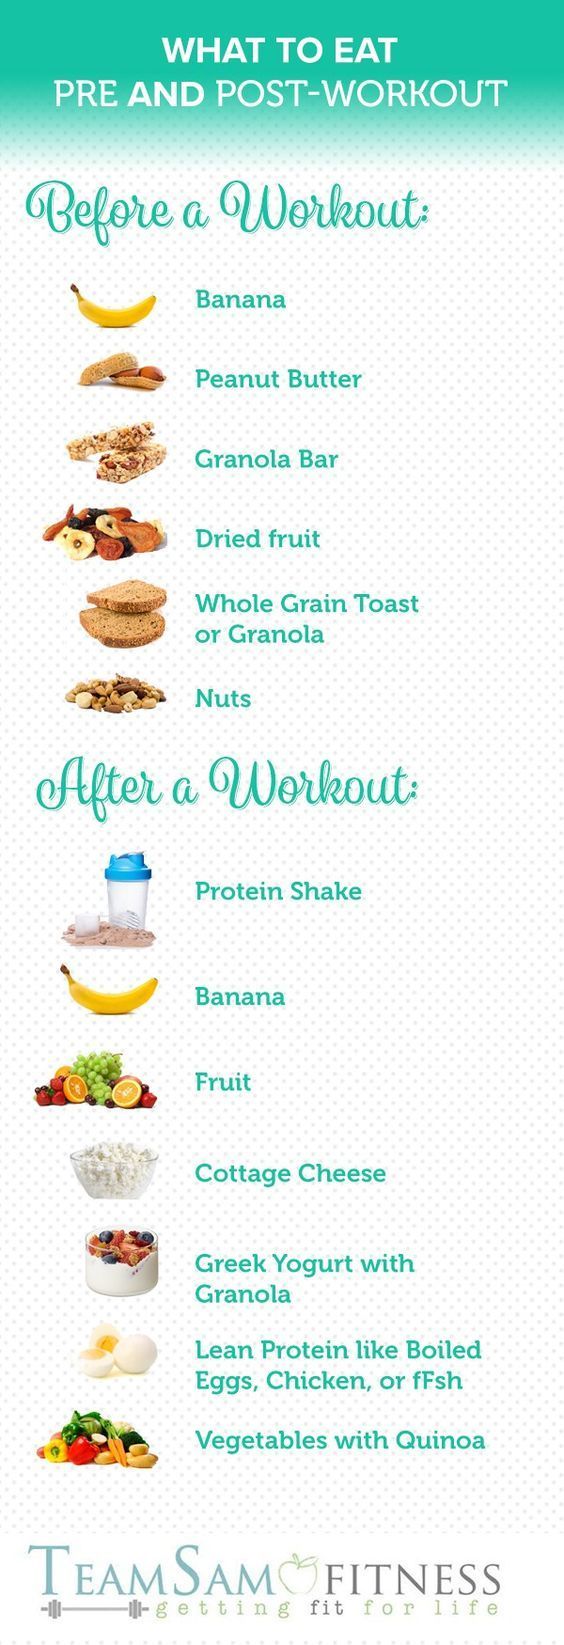 14 fitness Food routine ideas